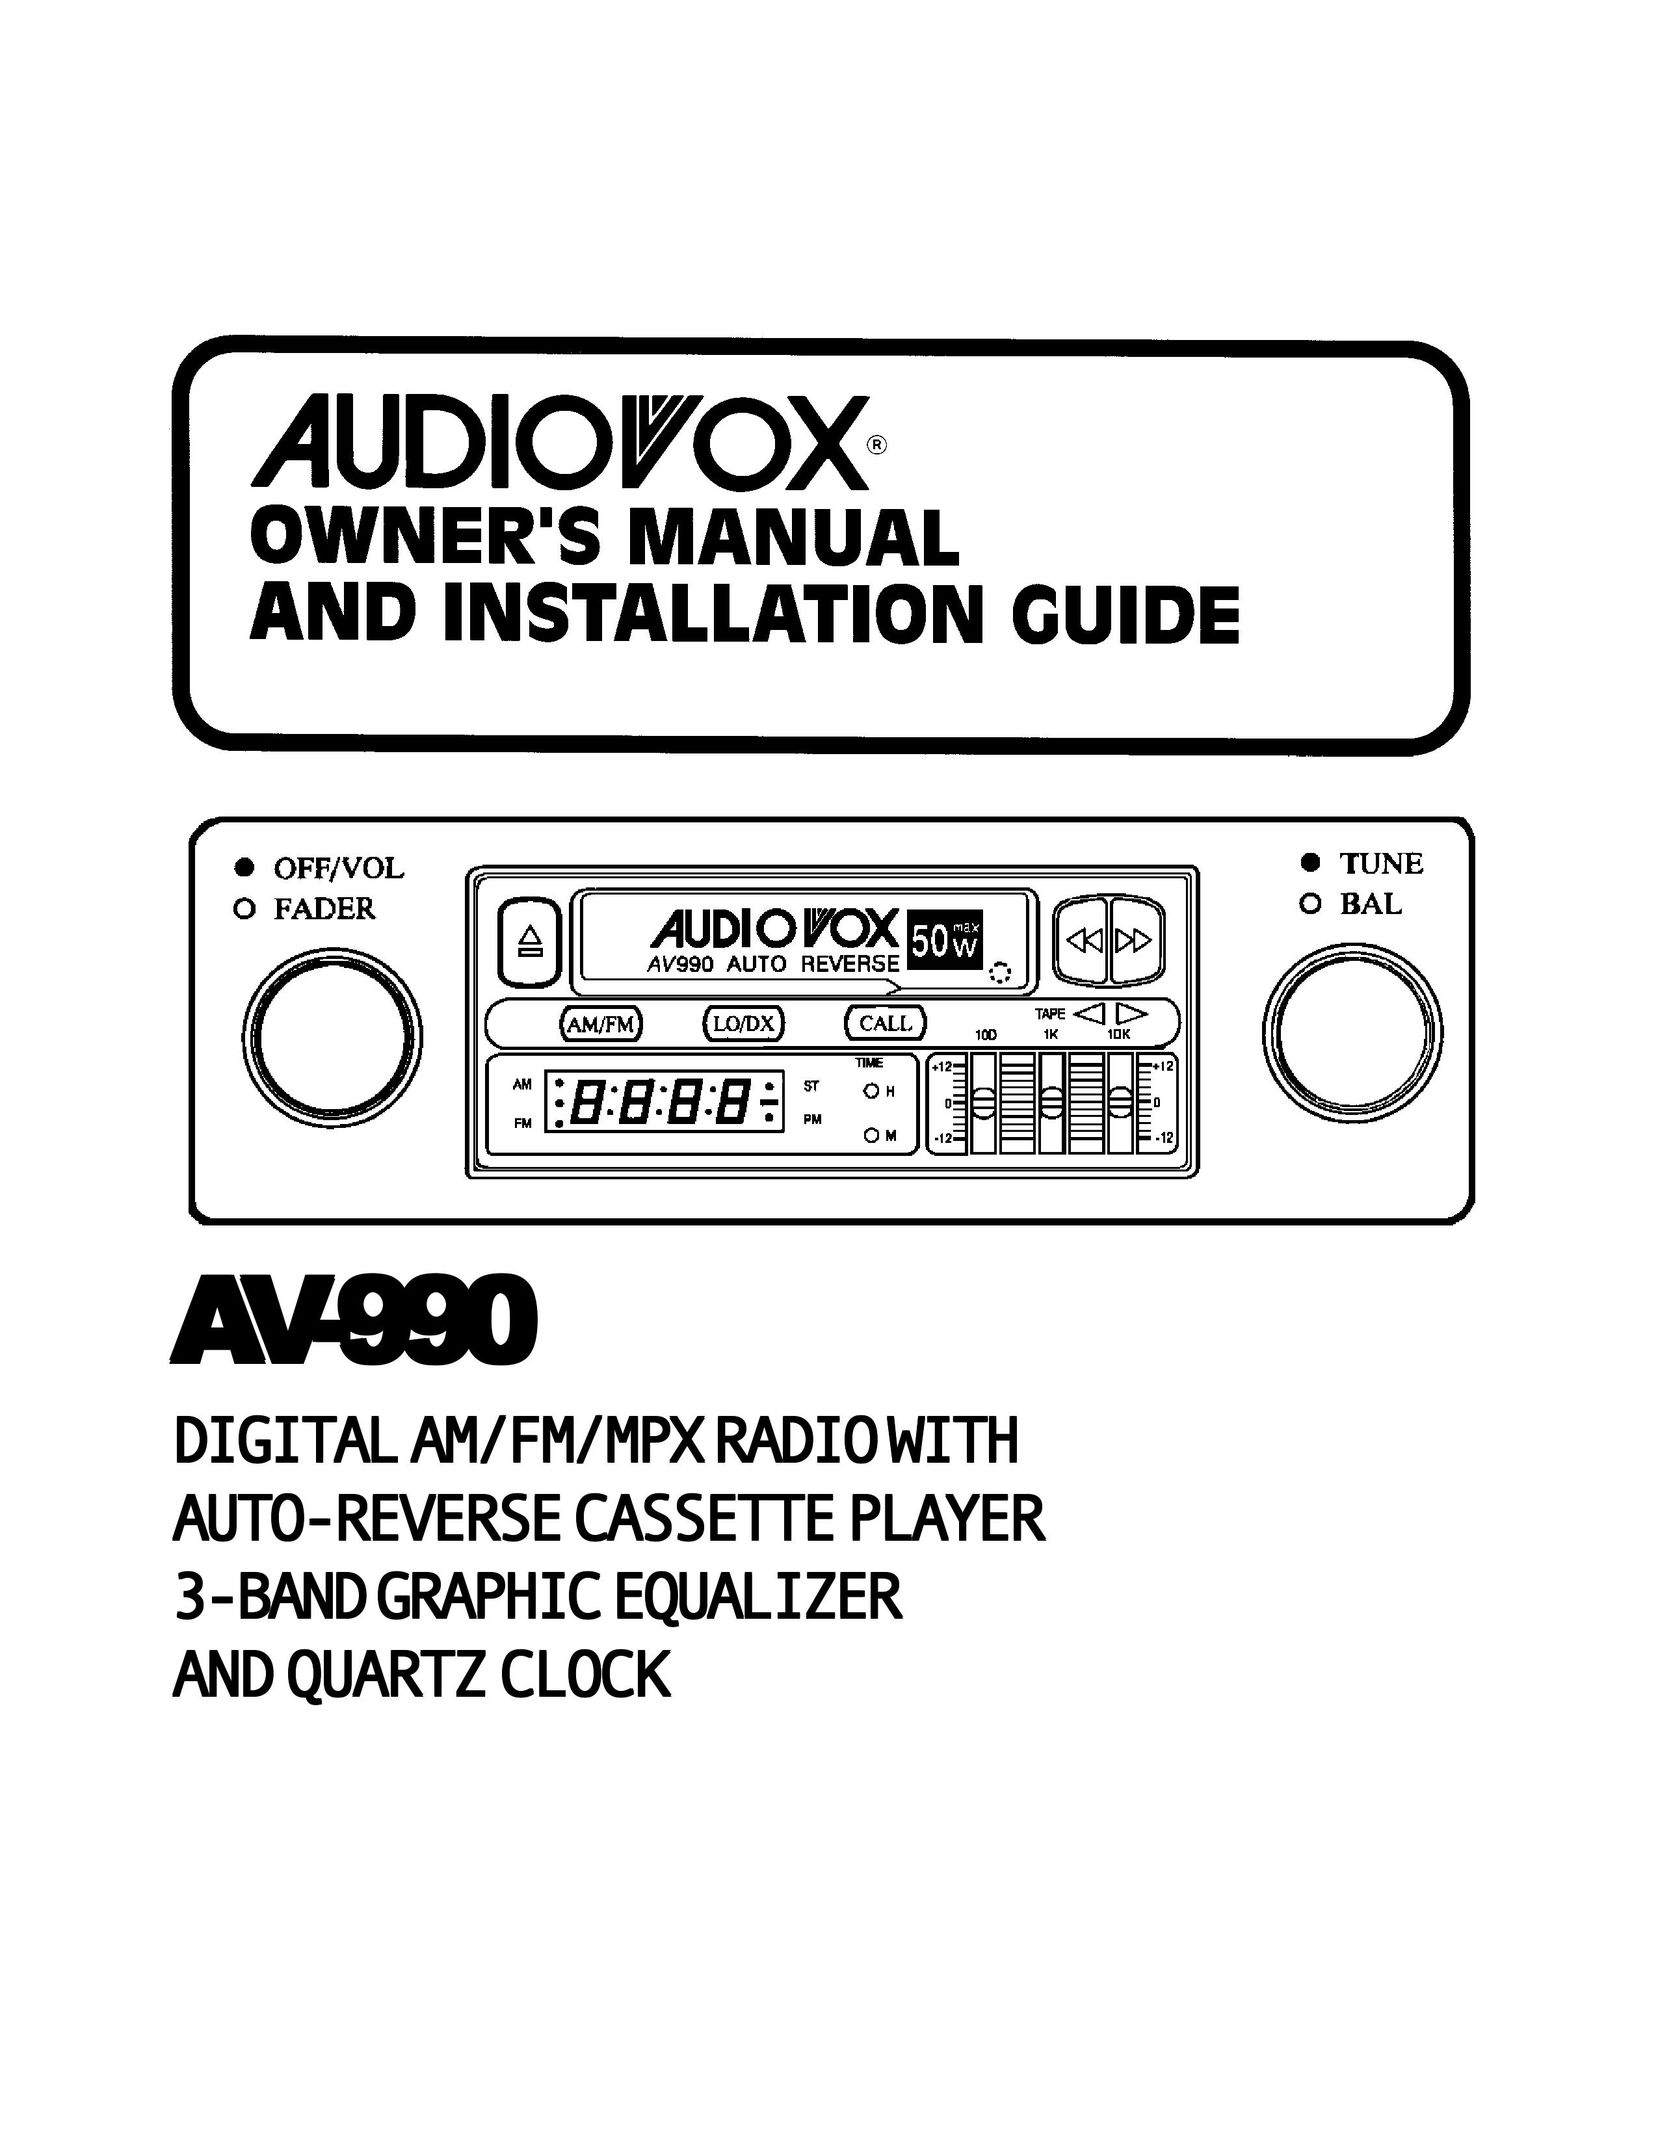 Audiovox 990 Cassette Player User Manual